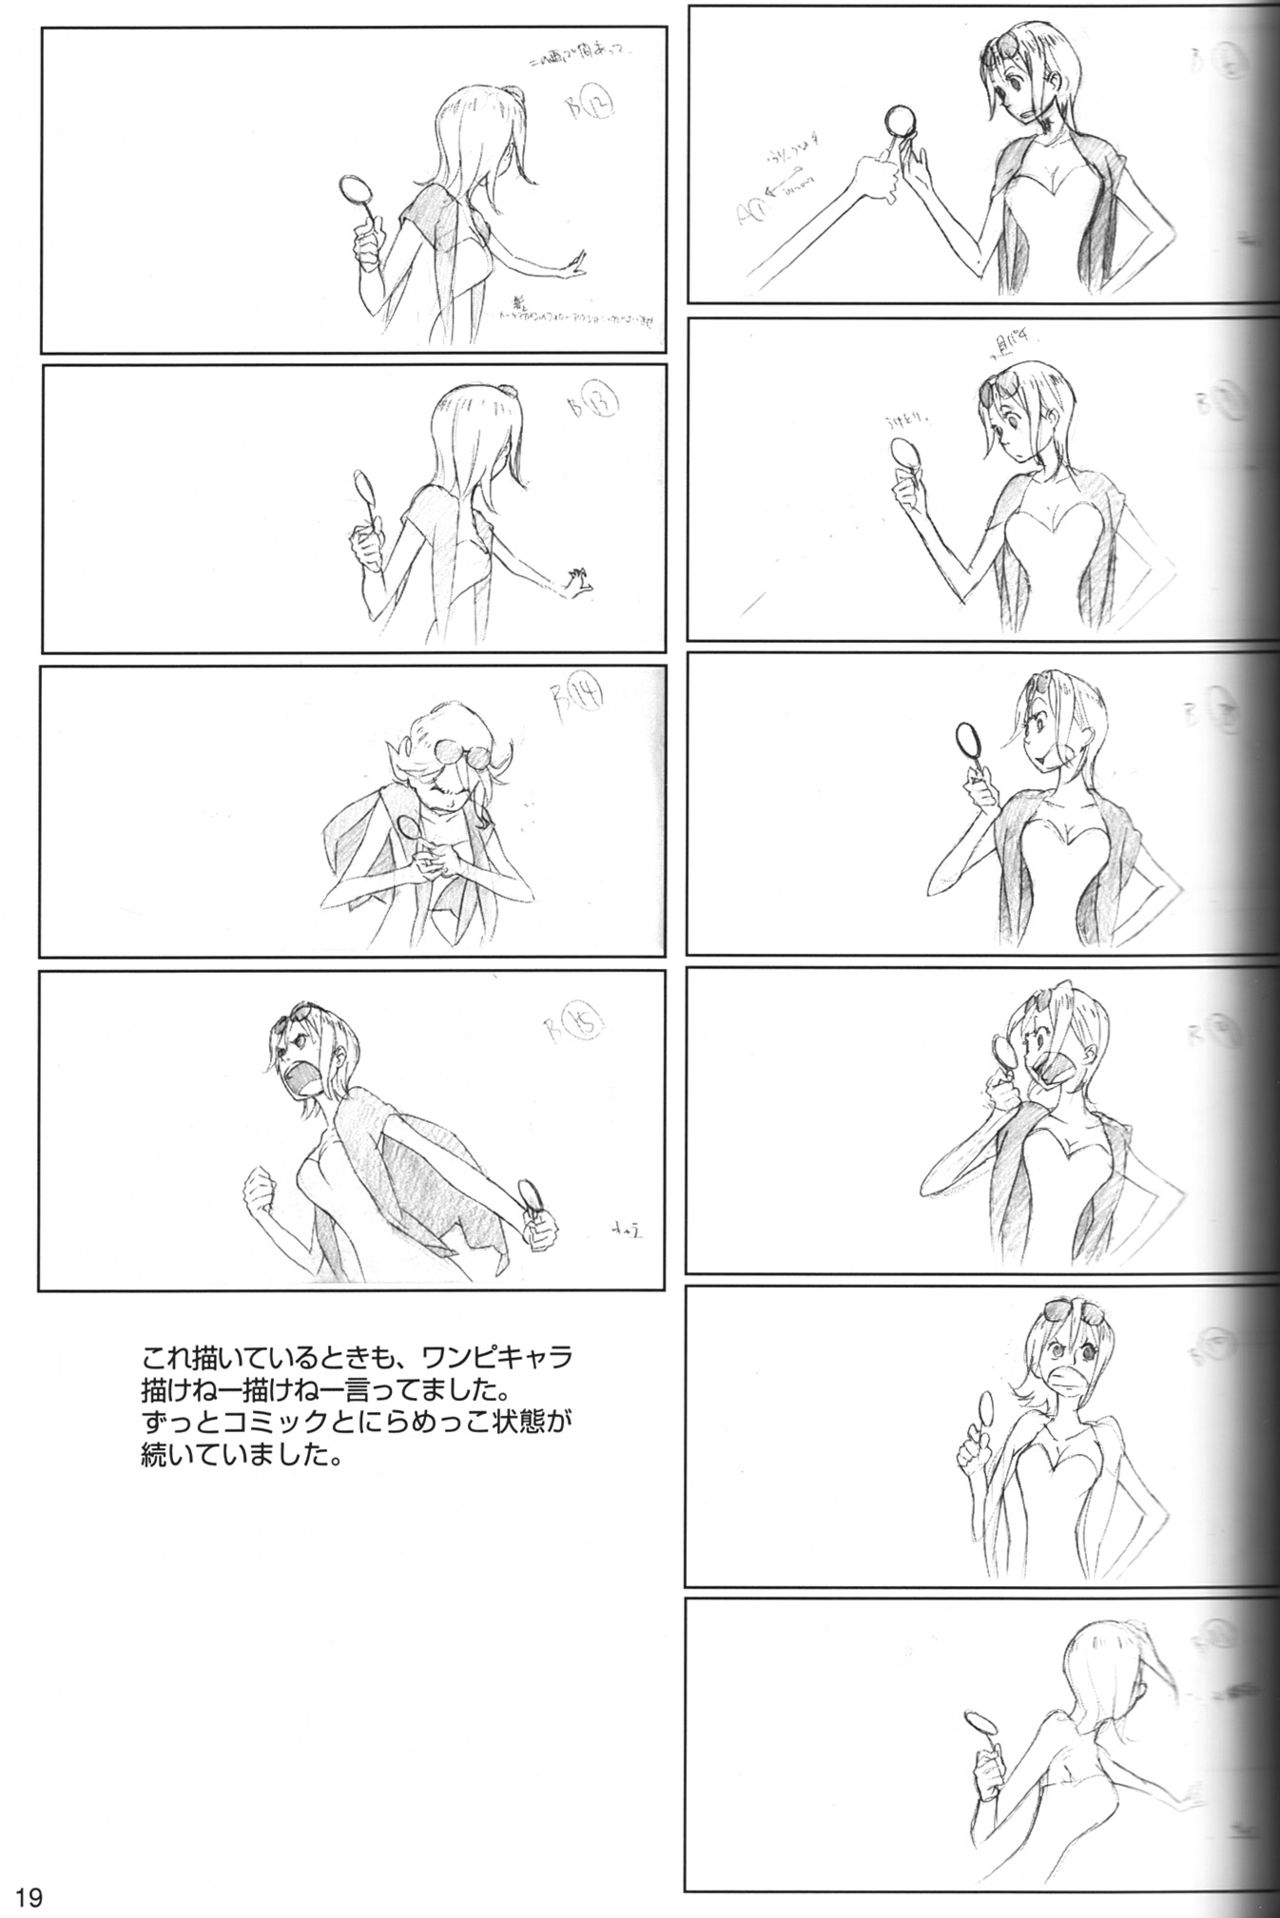 [Artbook] Sushio One Piece Movie 06 - Pencil Test and Design Book 17